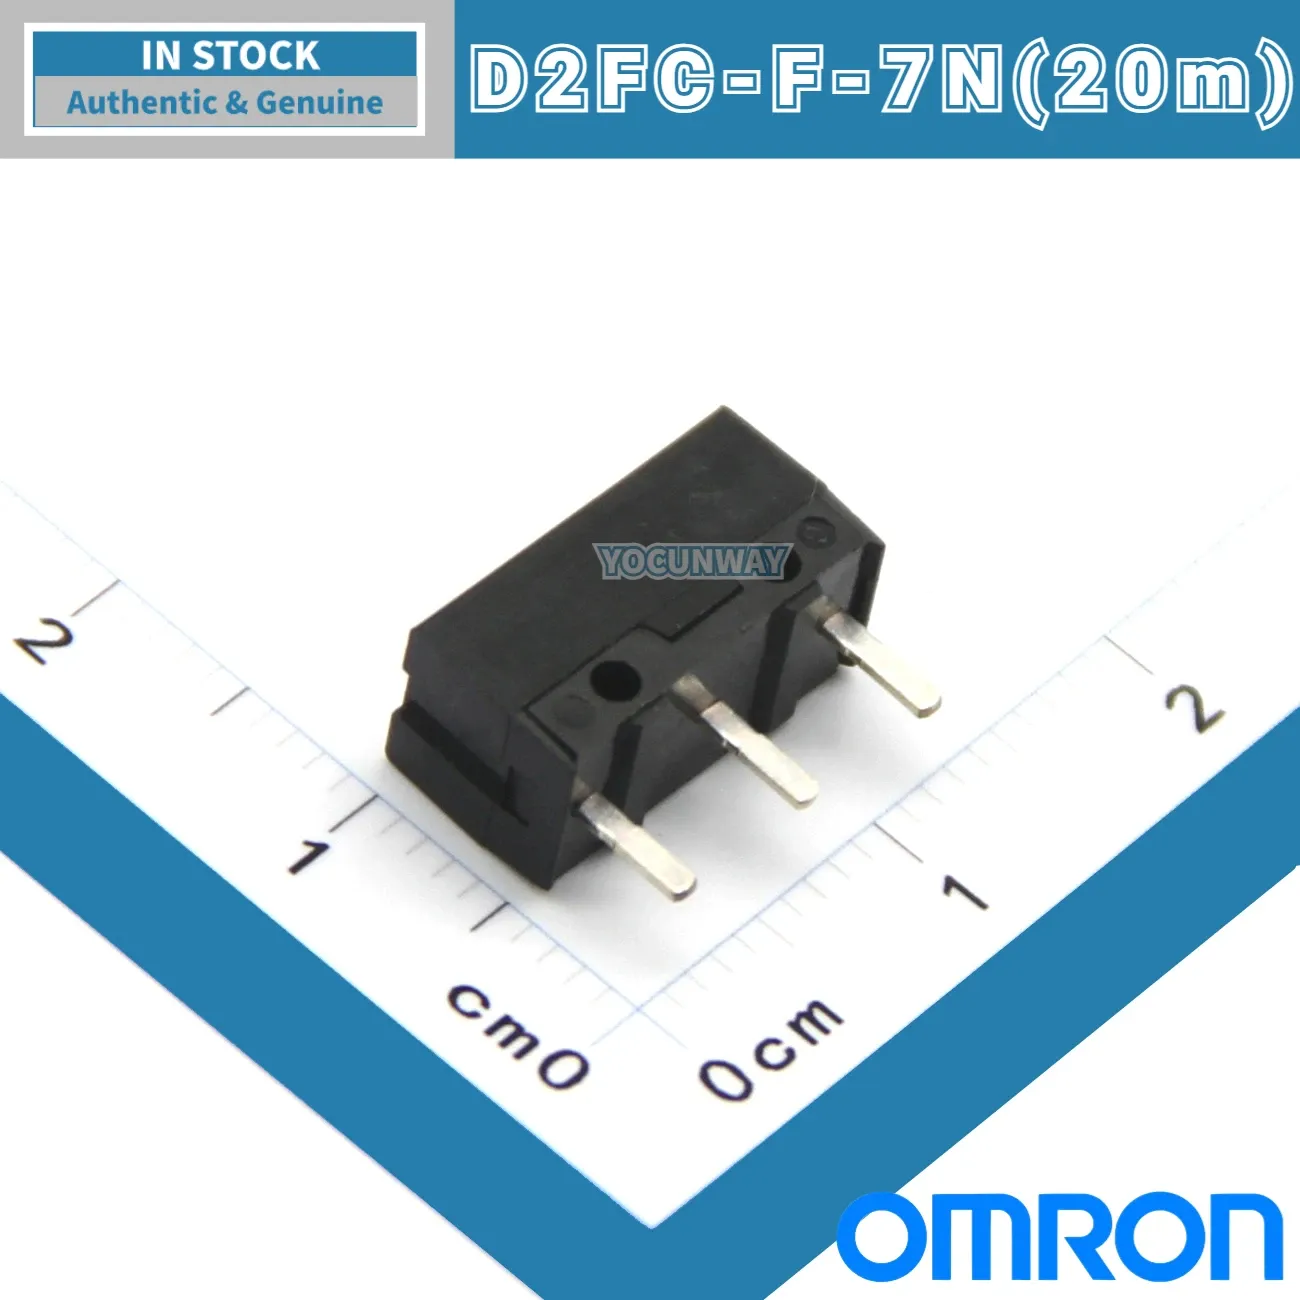 Novo autêntico Japão original Omron Mouse Micro Switch D2FC-F-7N (20m) White Dot Limit Switch 3 pinos